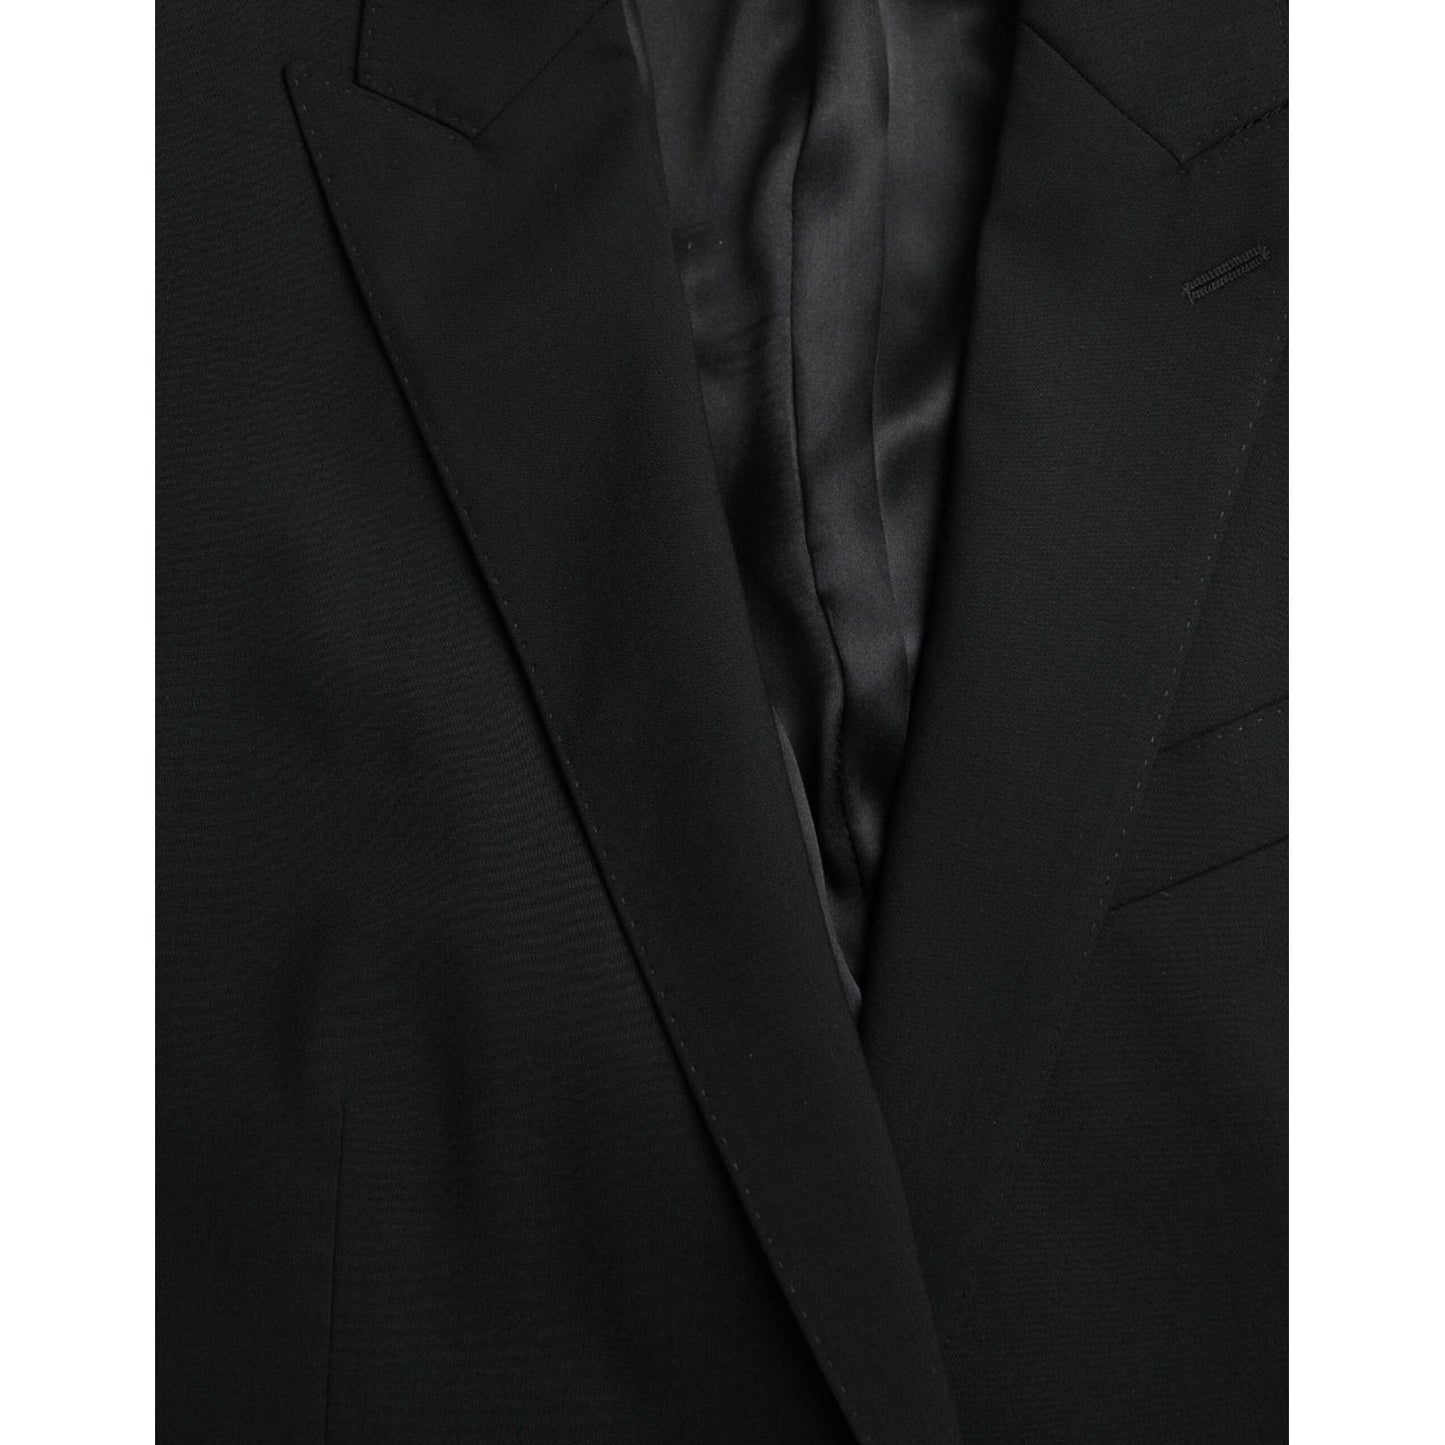 Dolce & Gabbana Black MARTINI Wool Formal 2 Piece Suit black-martini-wool-formal-2-piece-suit